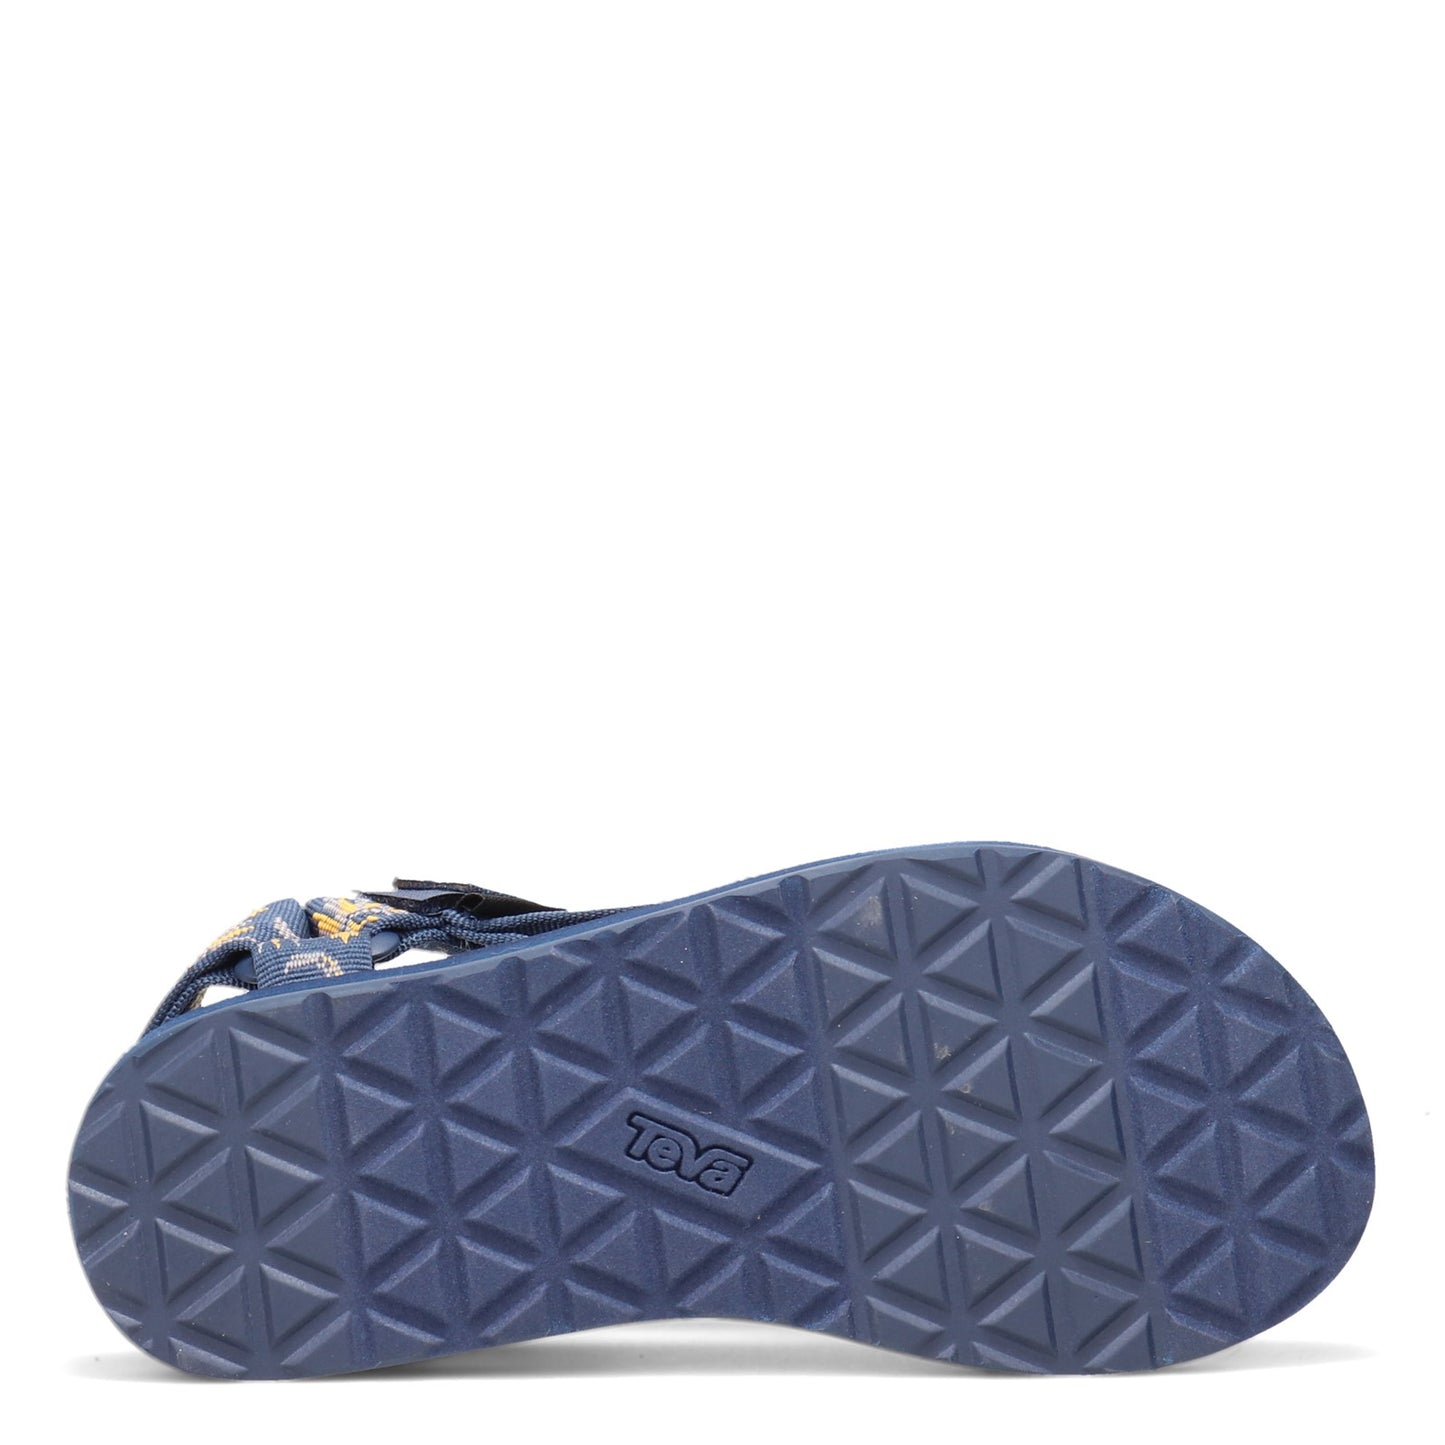 Peltz Shoes  Women's Teva Original Universal Sandal BLUE 1003987-SAMIB